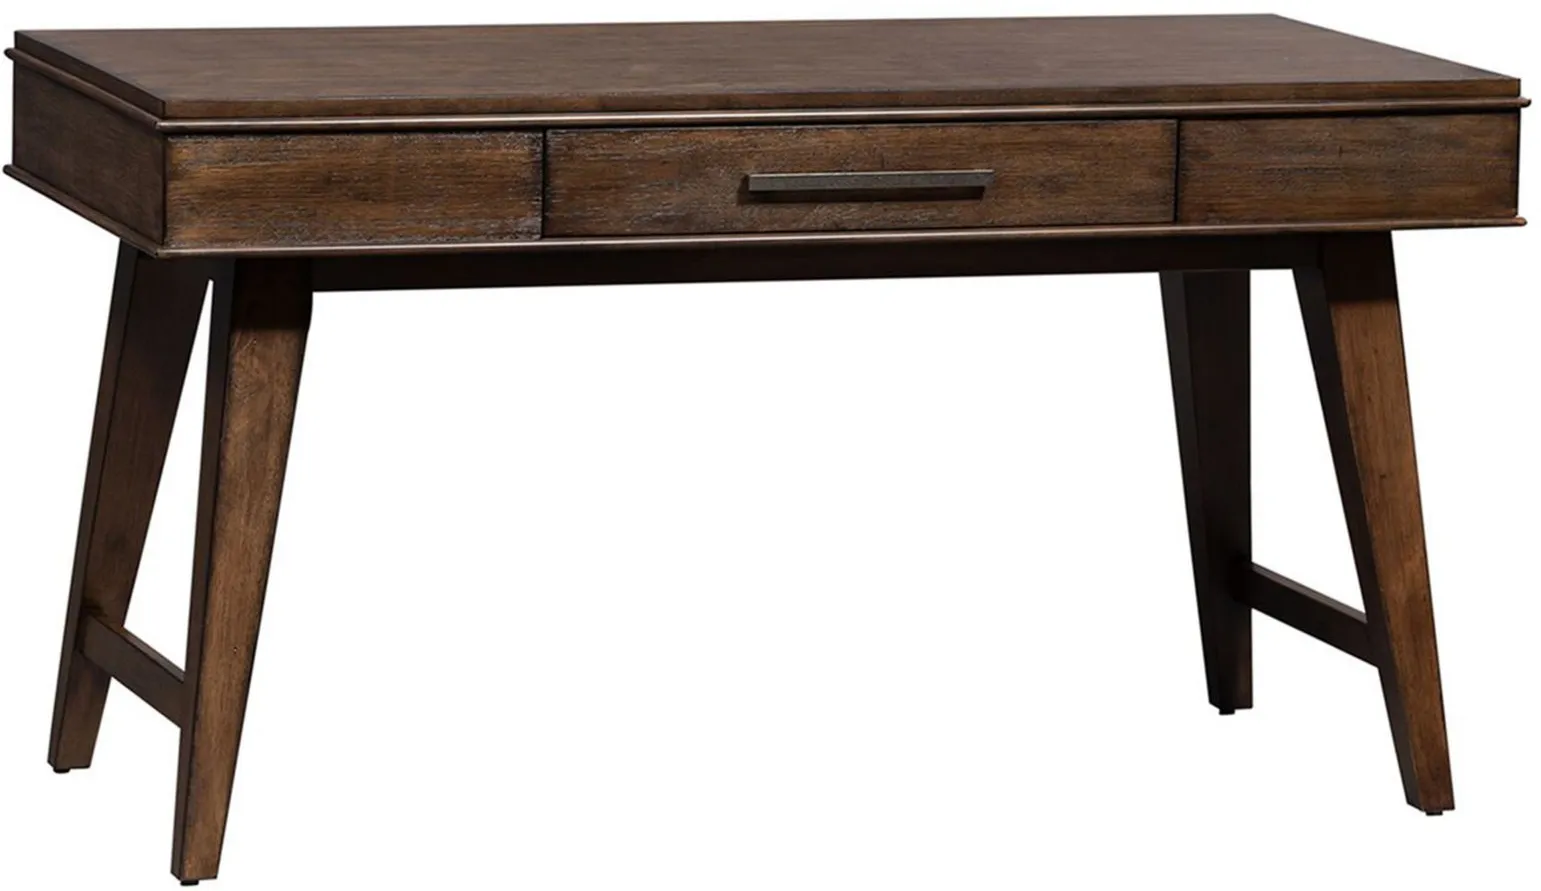 Ventura Blvd Adjustable-Height Standing Writing Desk in Dark Brown by Liberty Furniture